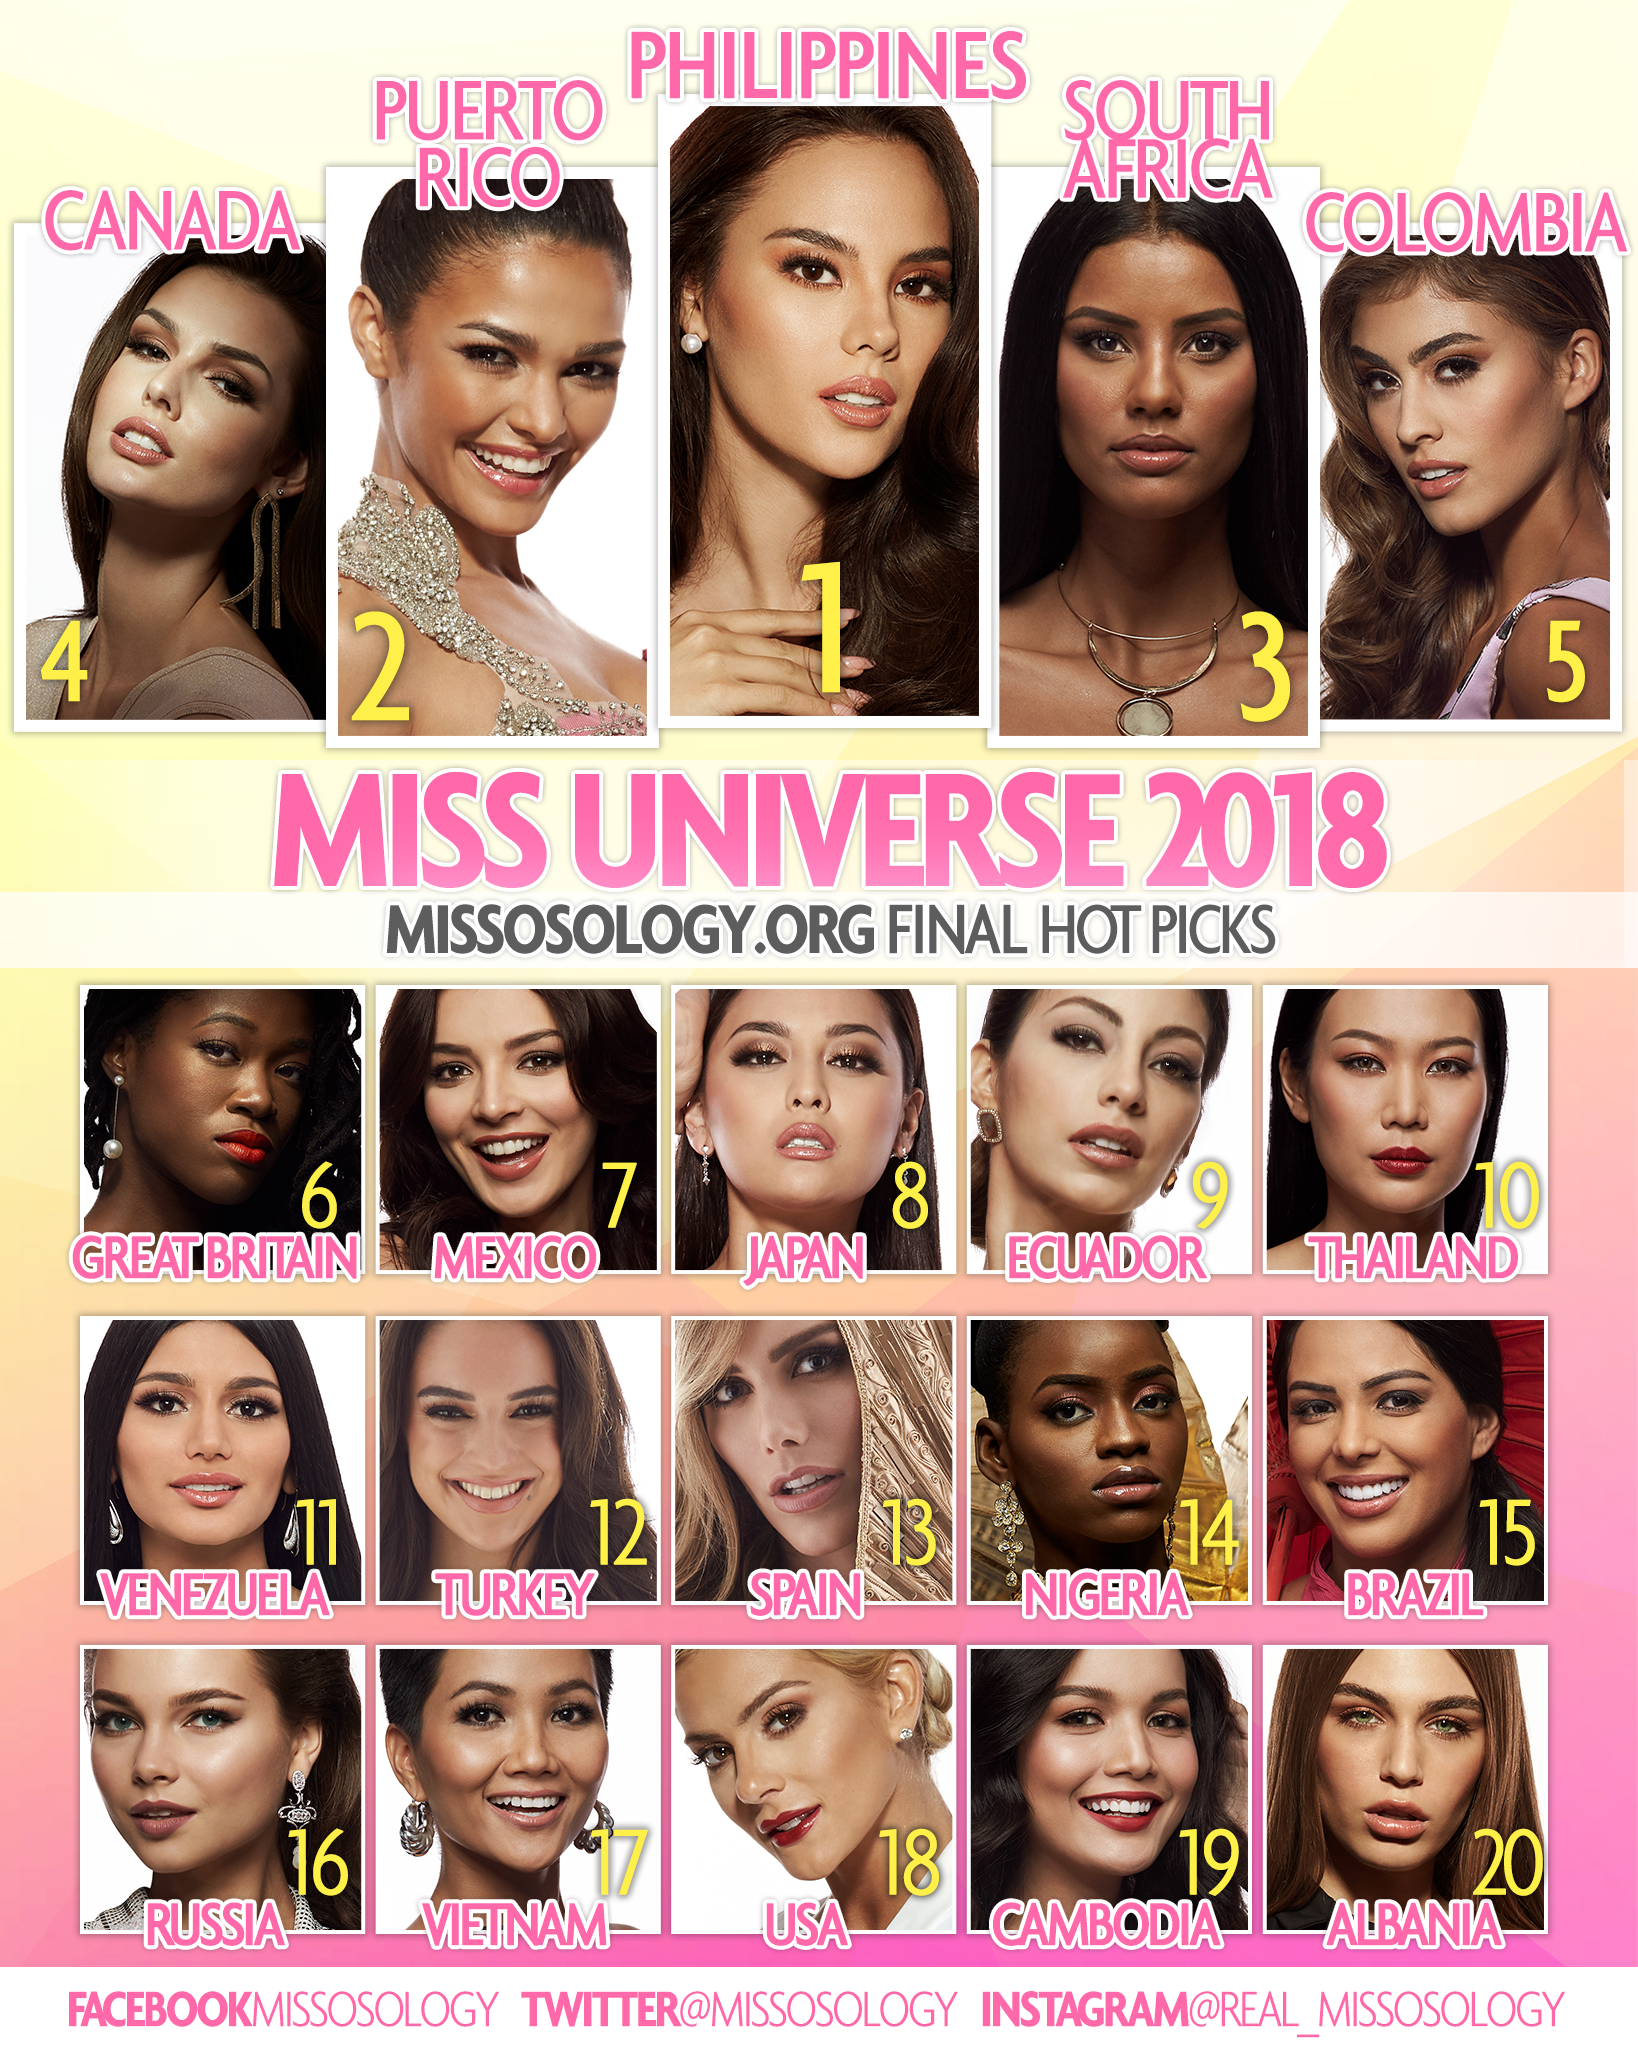 ultimo hot picks de missosology para miss universe 2018.